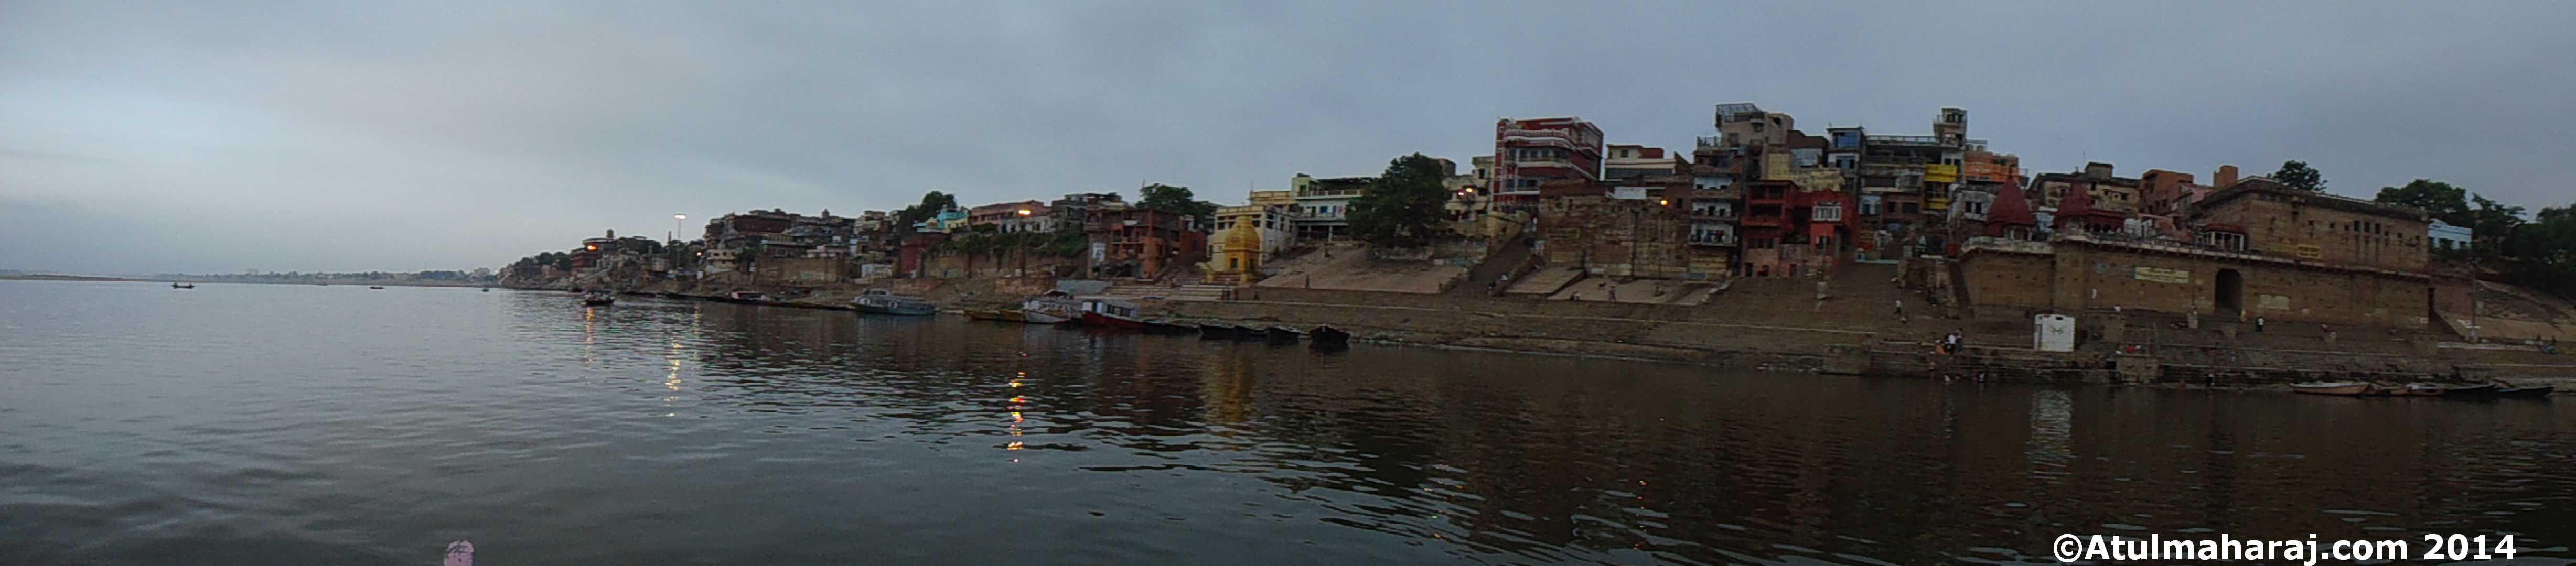 Varanasi from the Ganga - Atulmaharaj